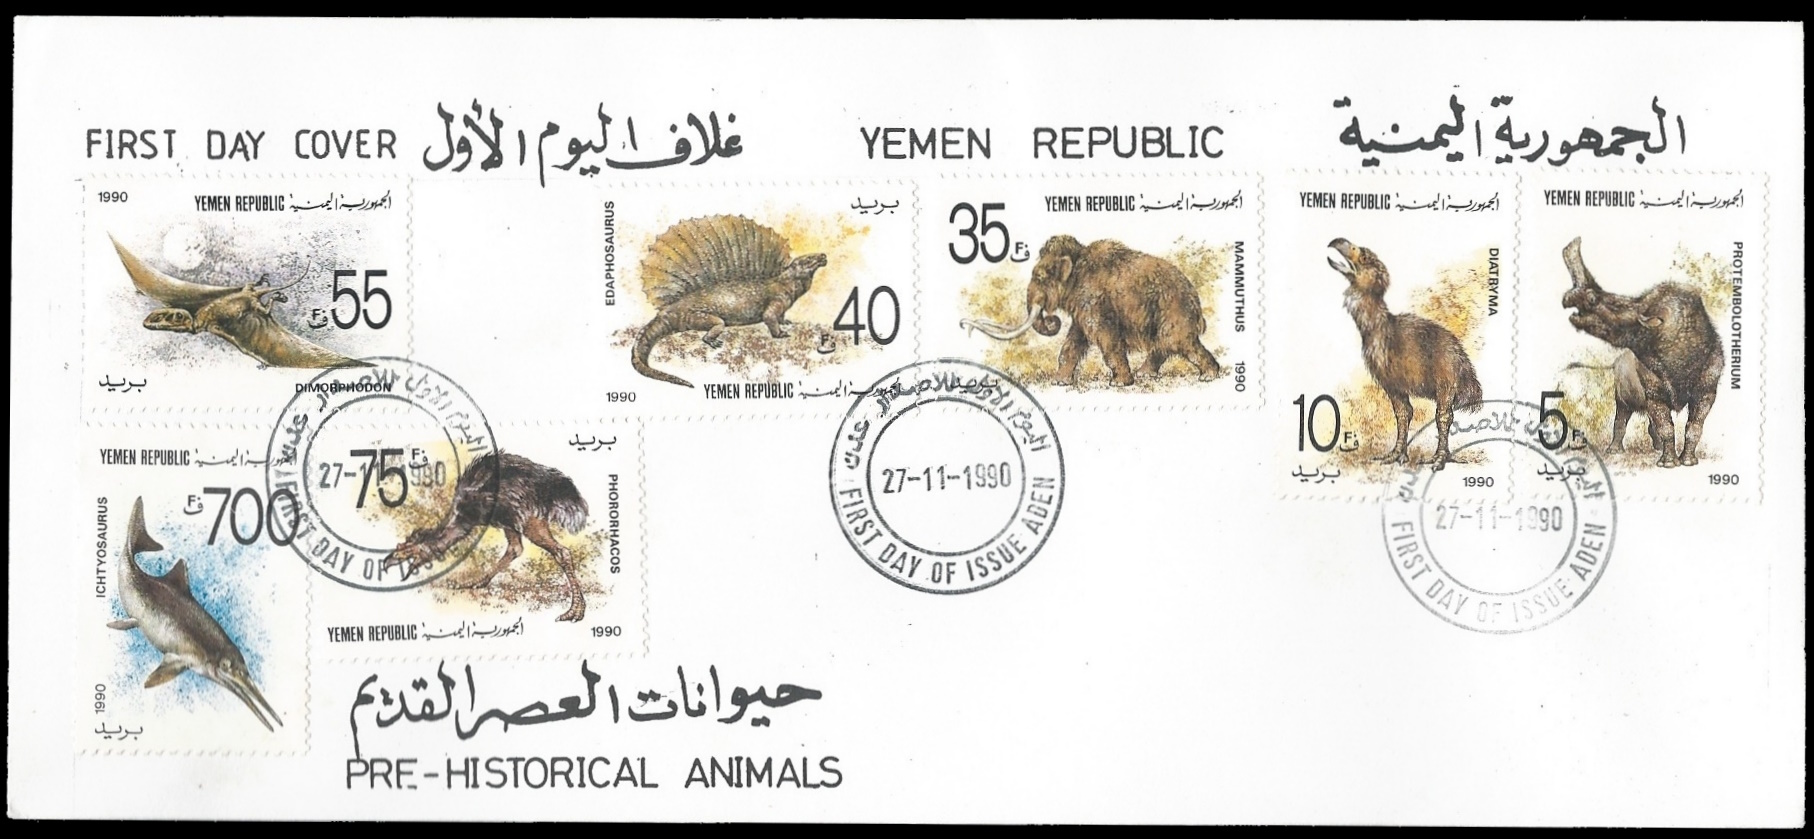 Prehistoric animals on FDC of Yemen